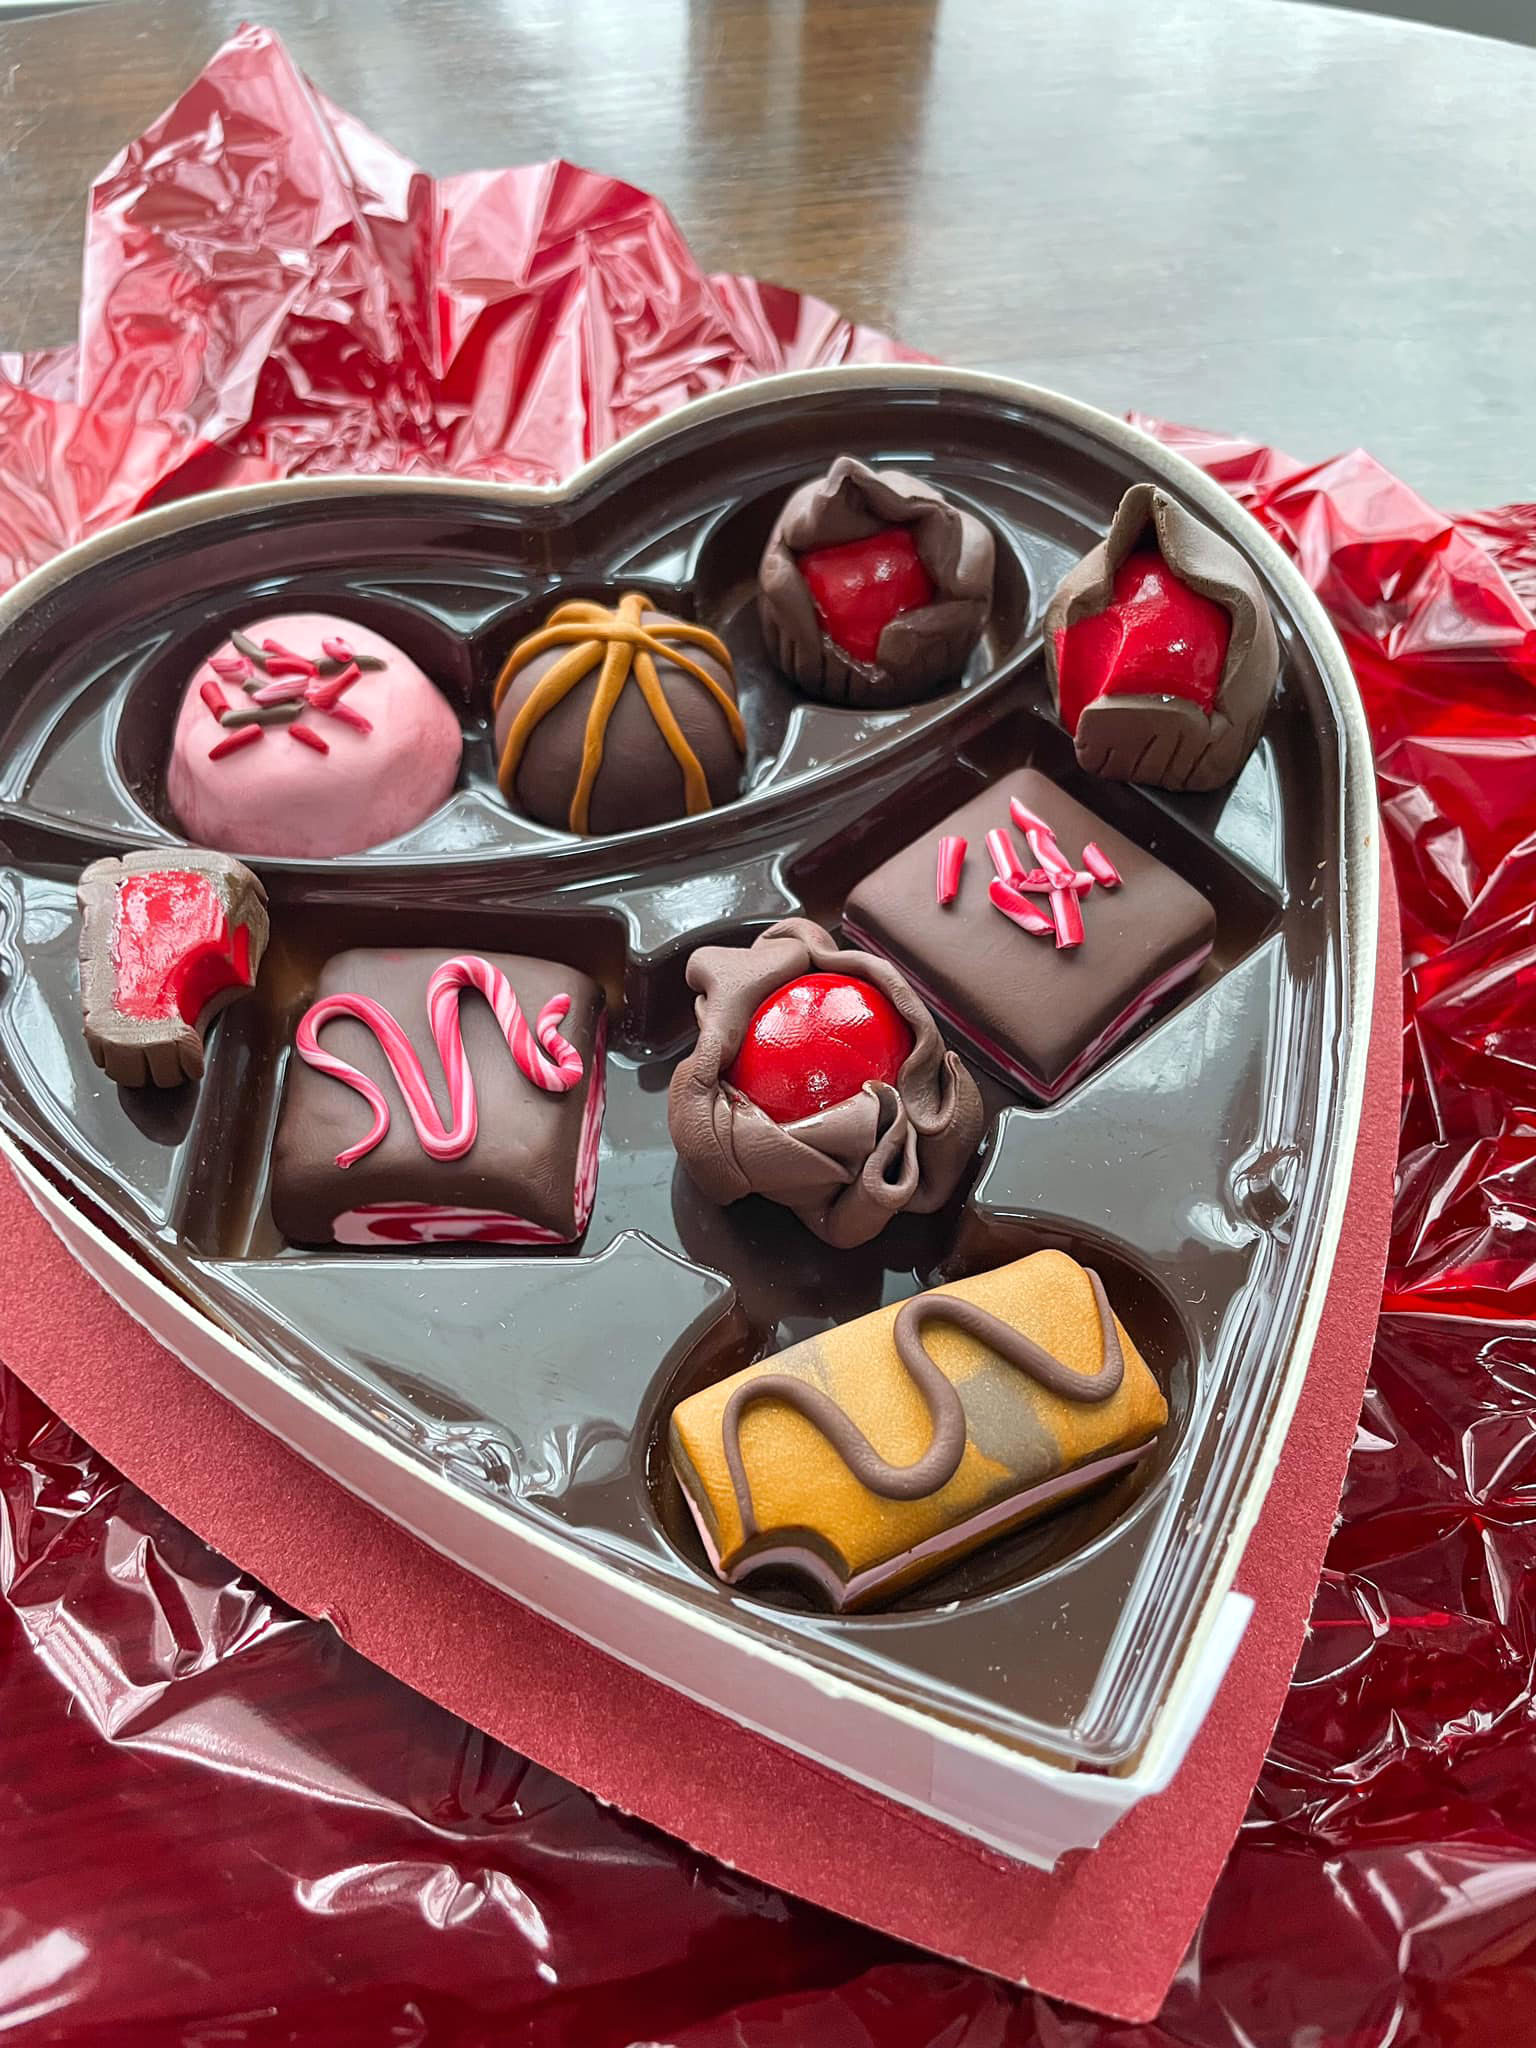 Veronica Averkamp Polymer Valentines Candy